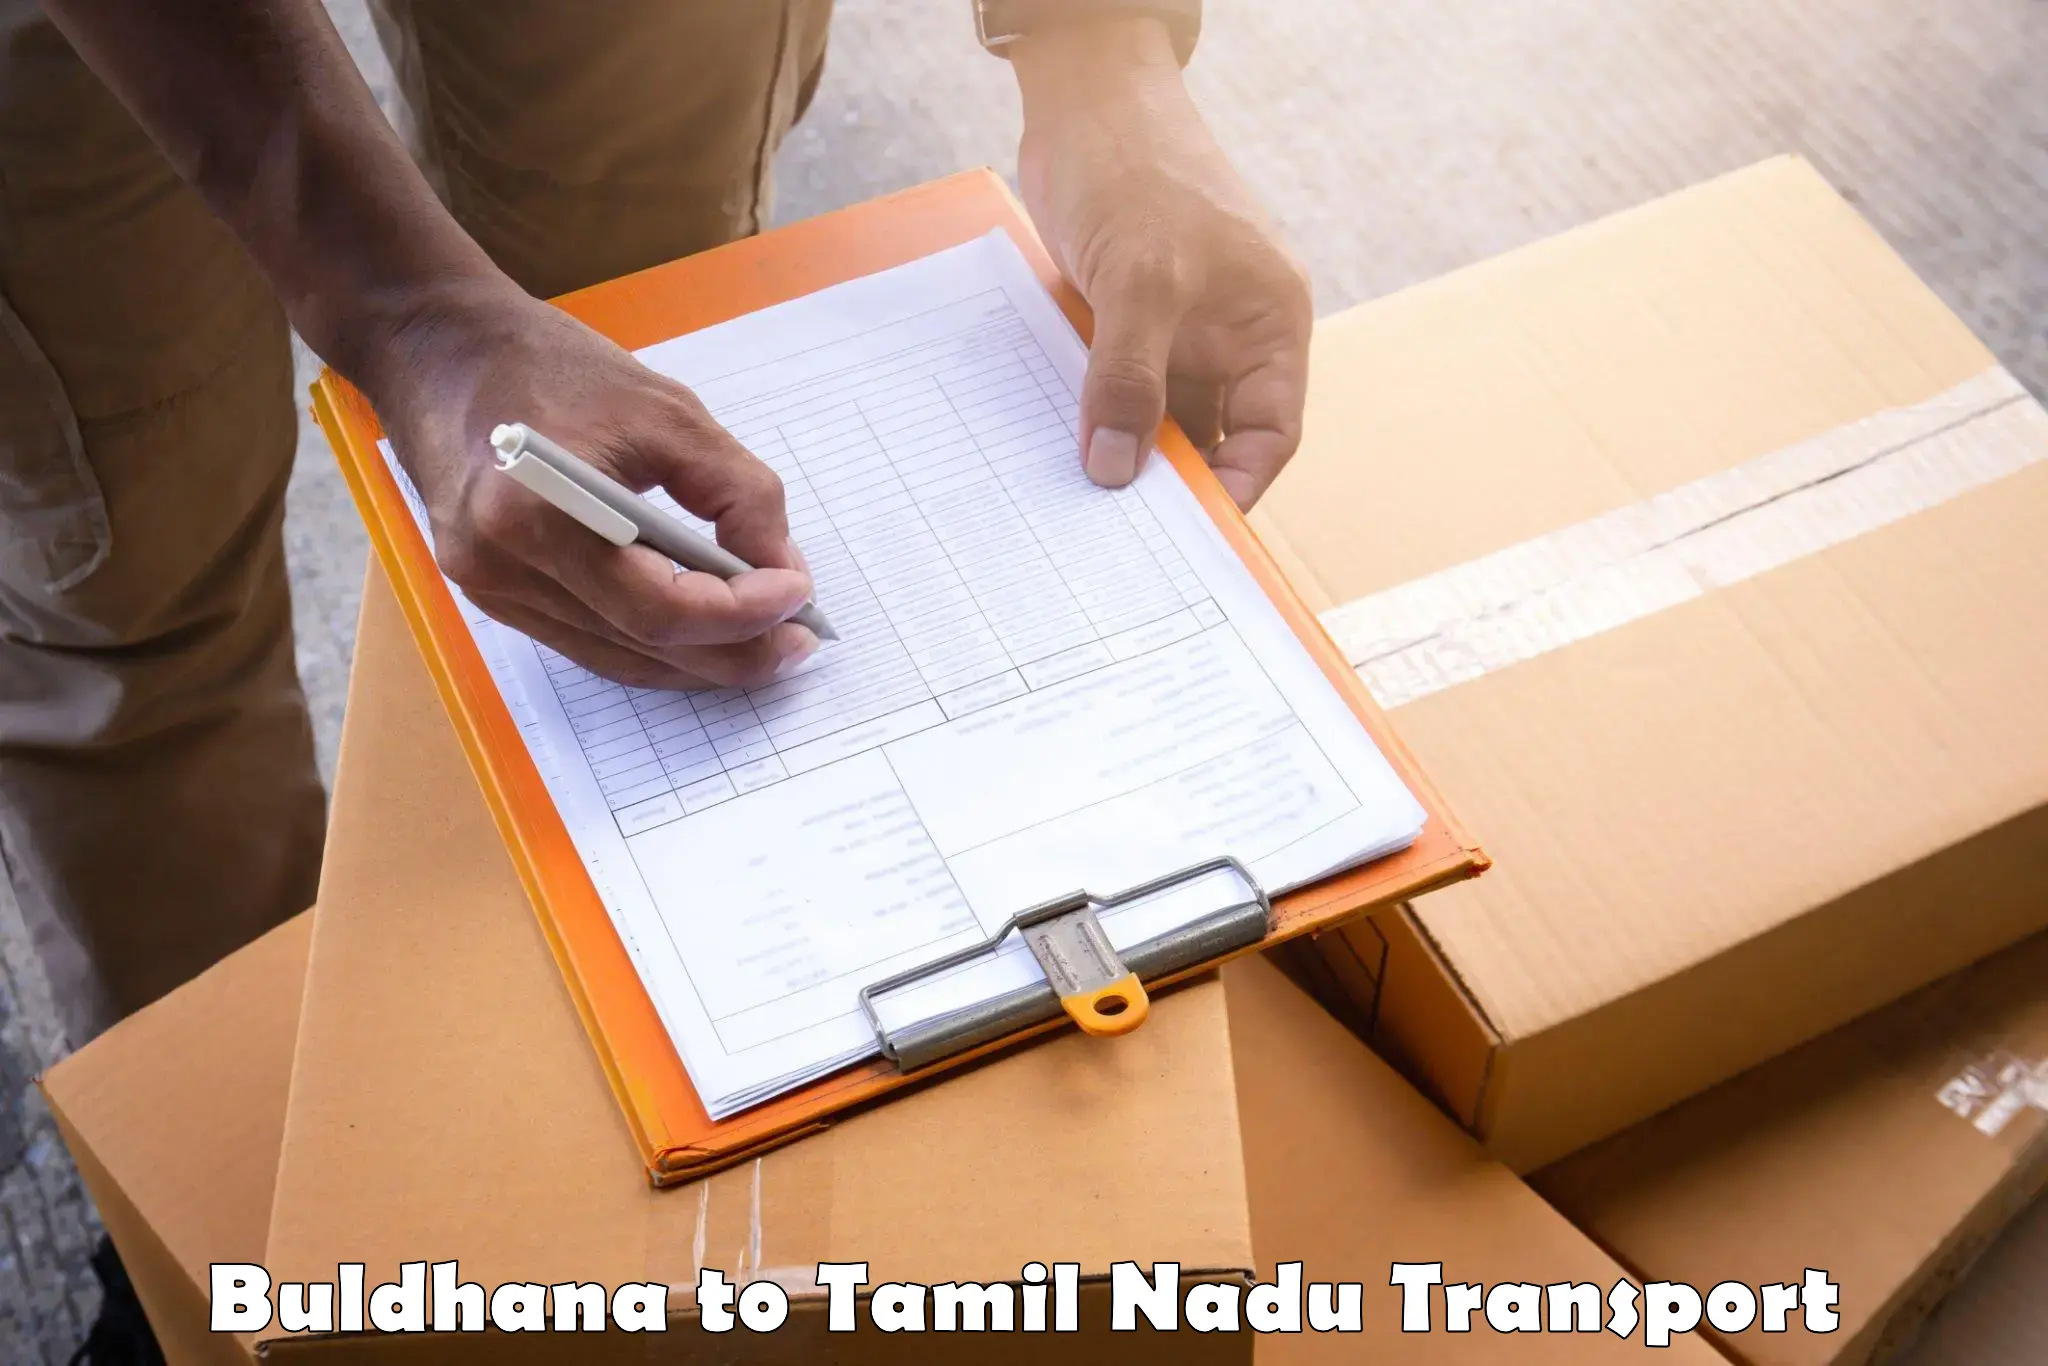 Daily transport service Buldhana to Tamil Nadu